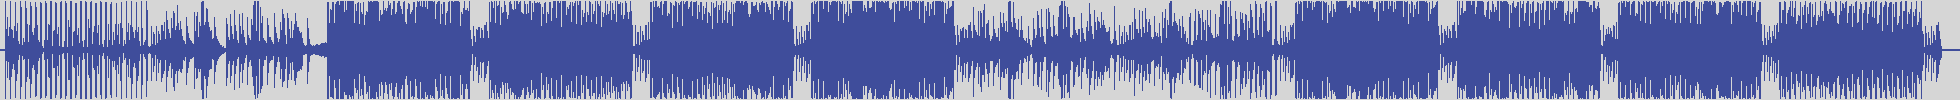 nf_boyz_records [NFY065] Philippe La Croix - La La La La [Henry B Deep Mix] audio wave form